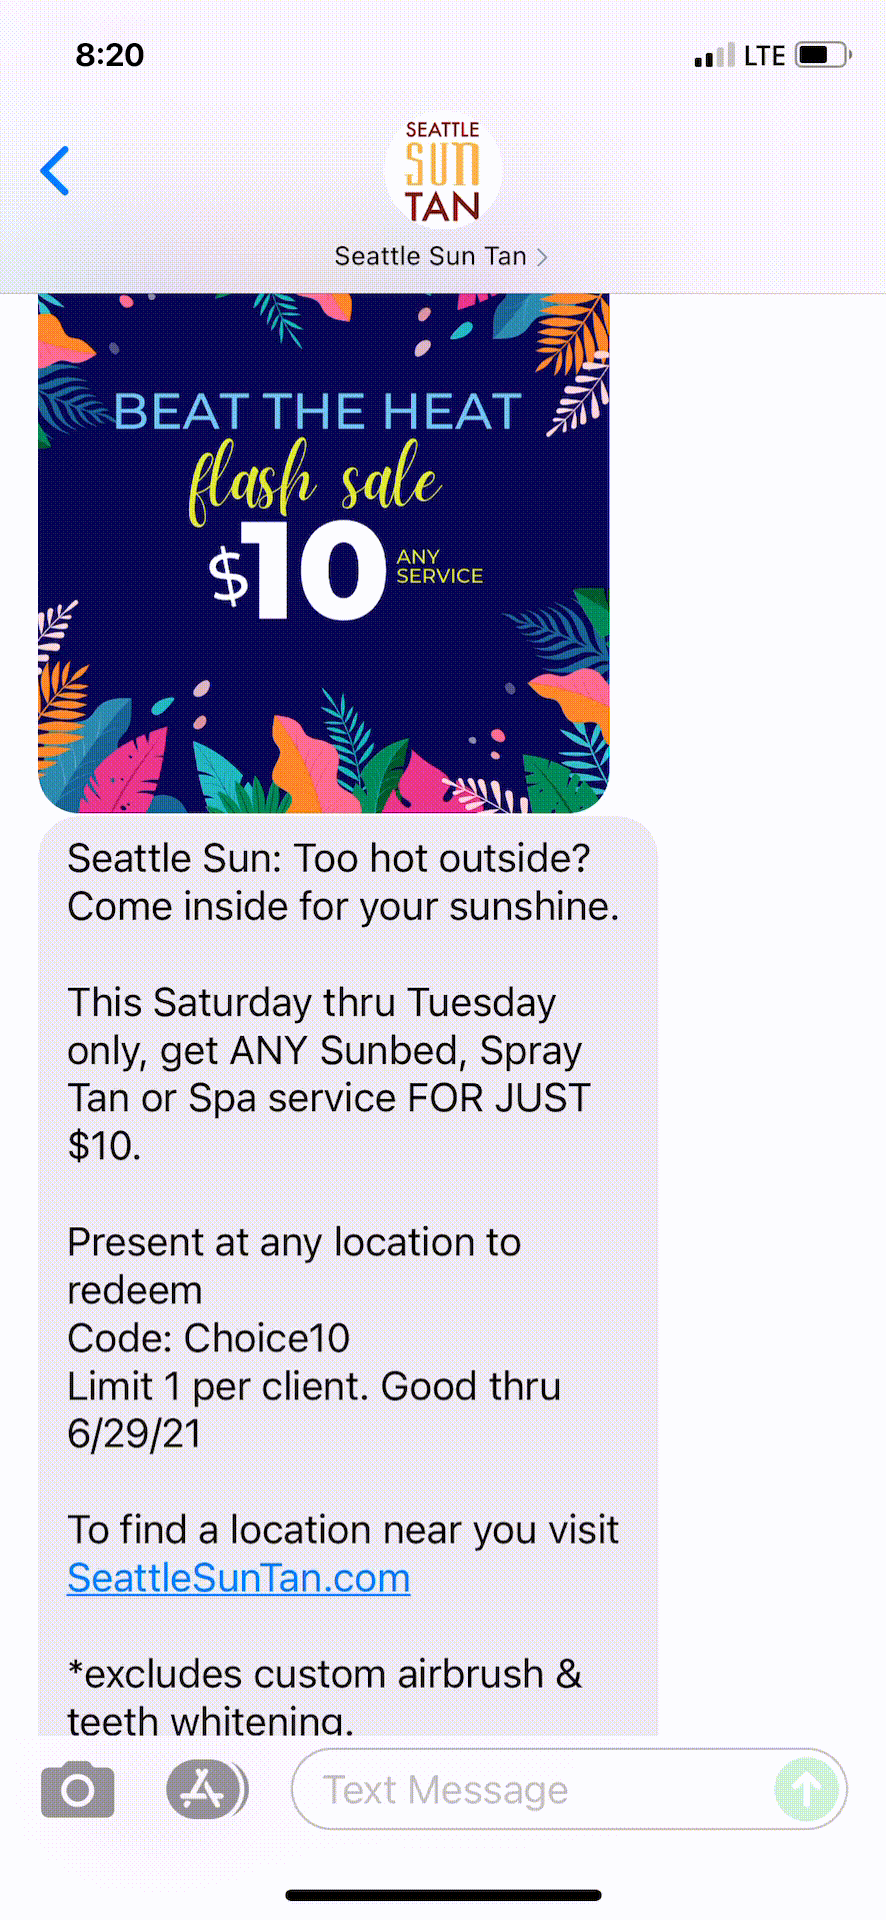 Seattle-Sun-Tan-Text-Message-Marketing-Example-06.25.2021